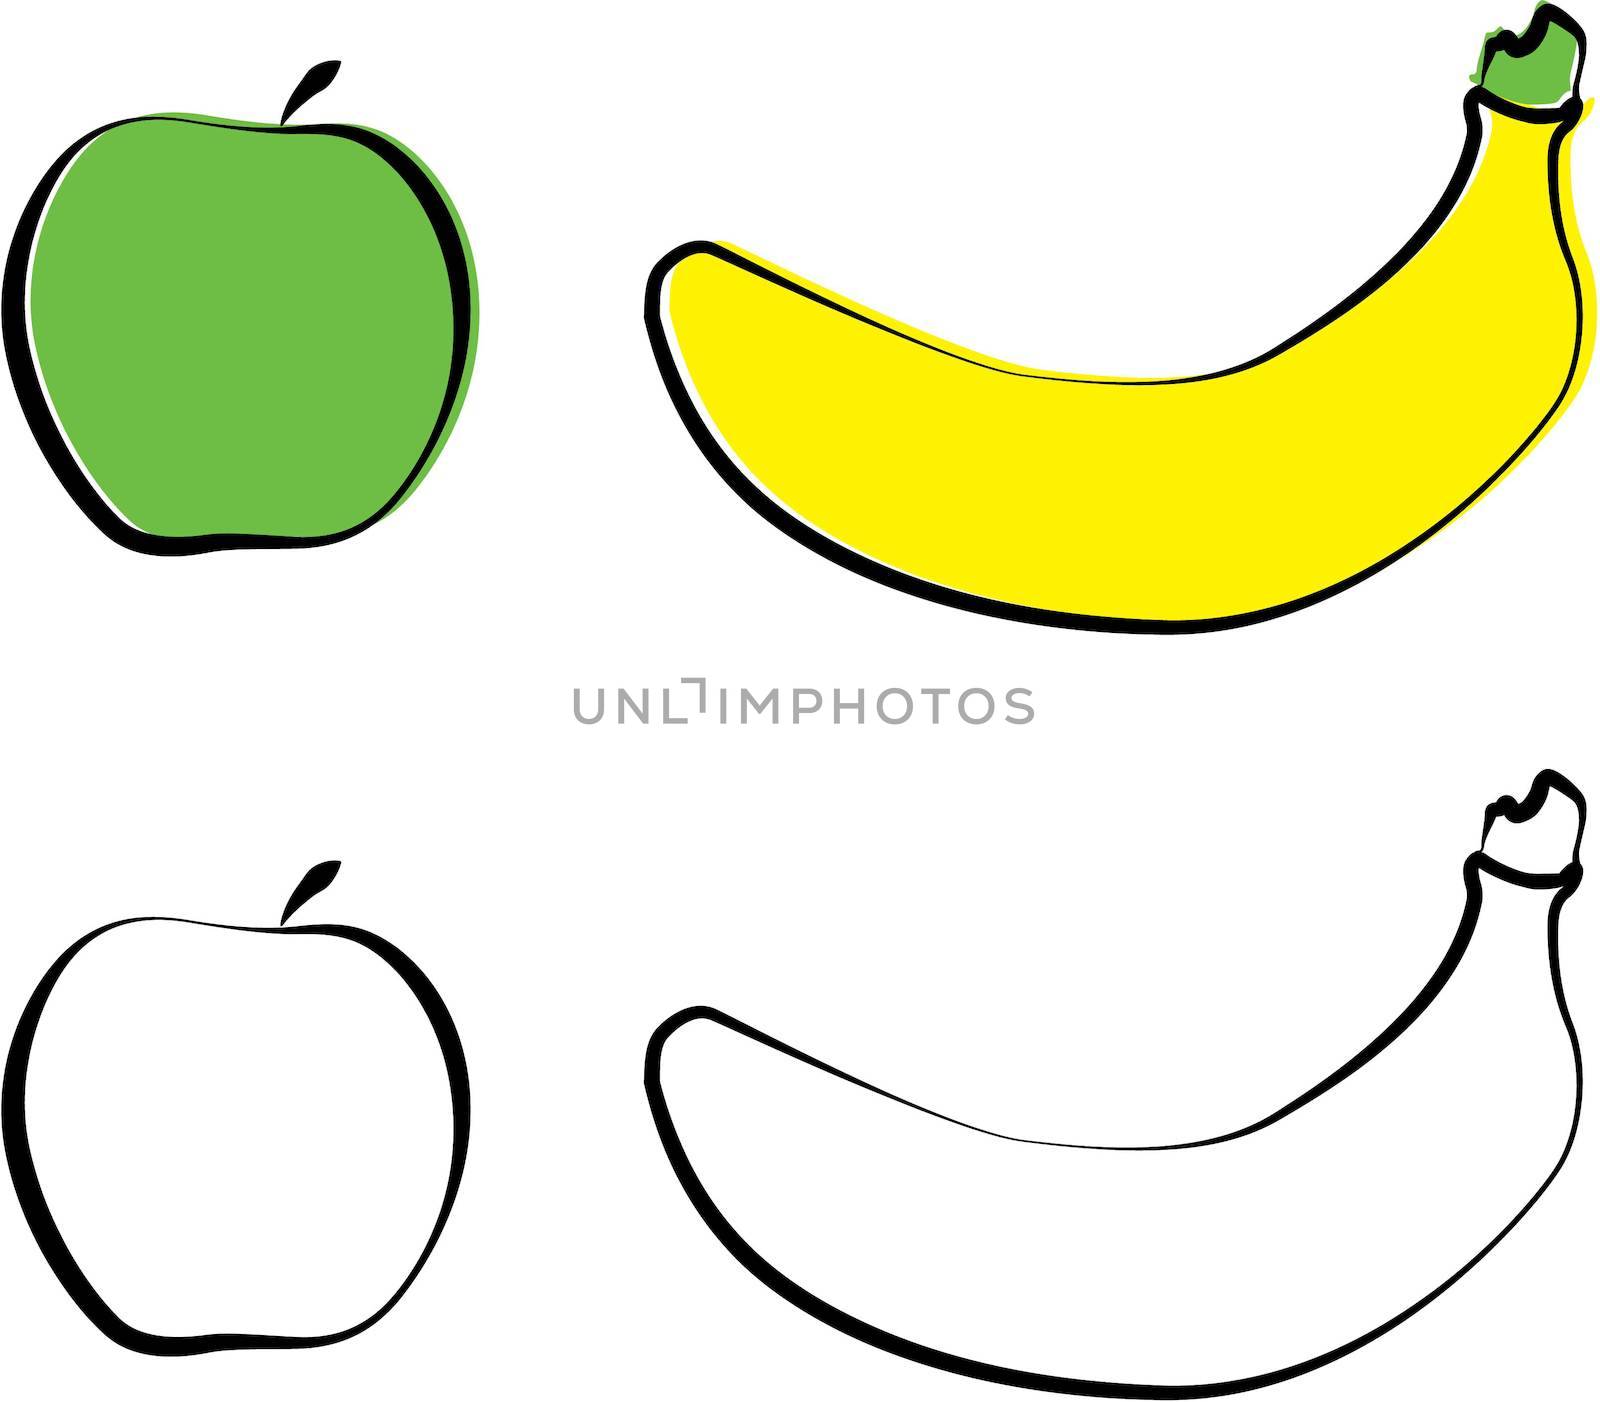 An Illustration of Apple and Banana